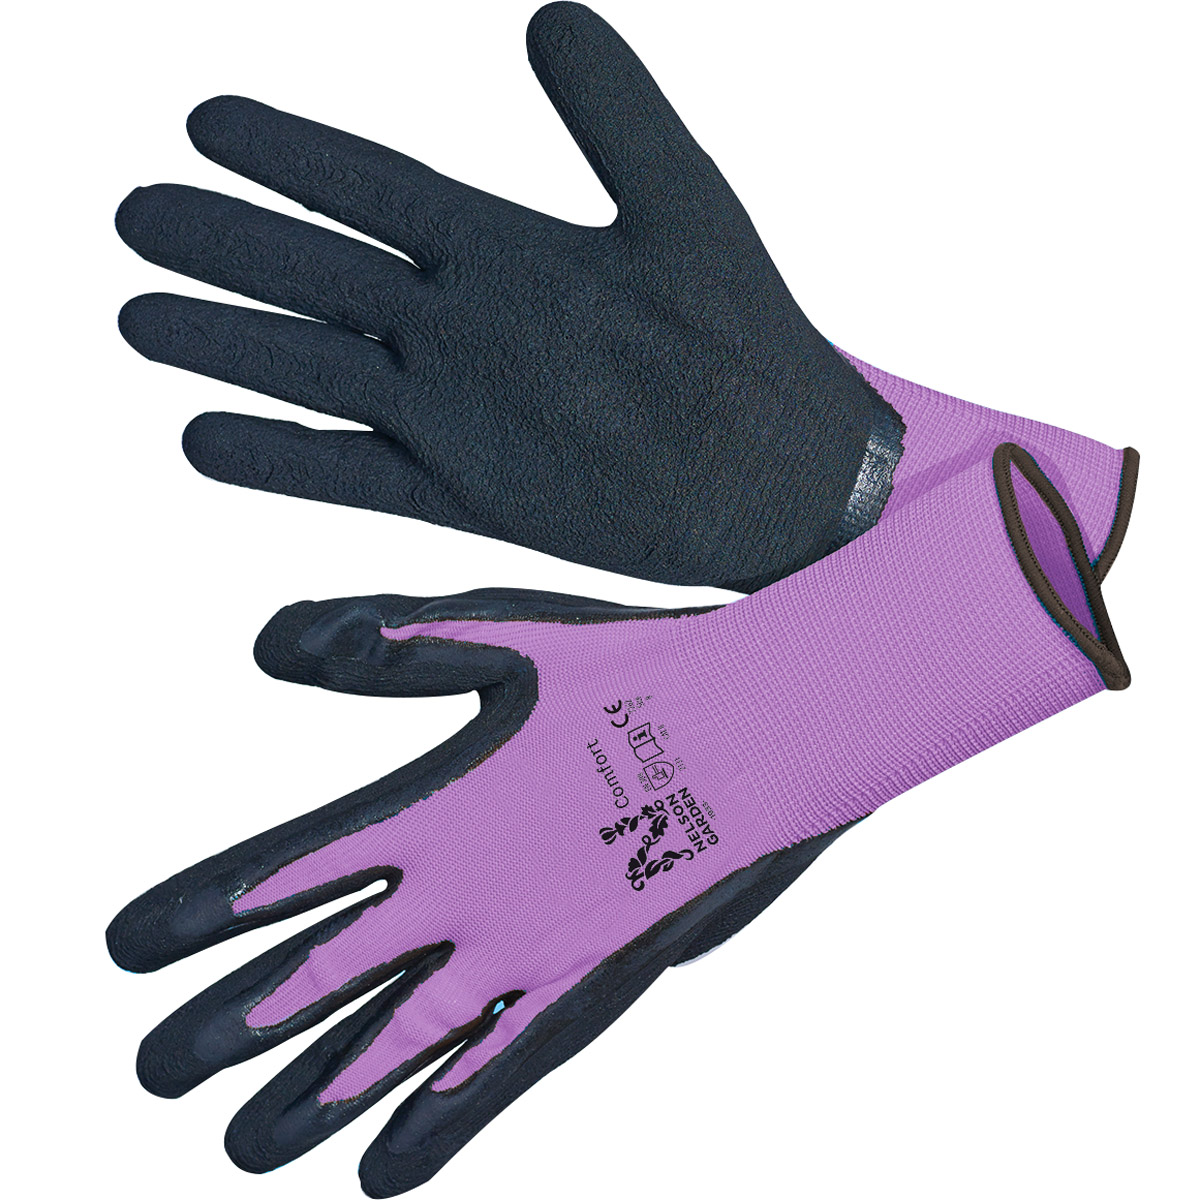 Handske Comfort, storlek 8 violett/svart